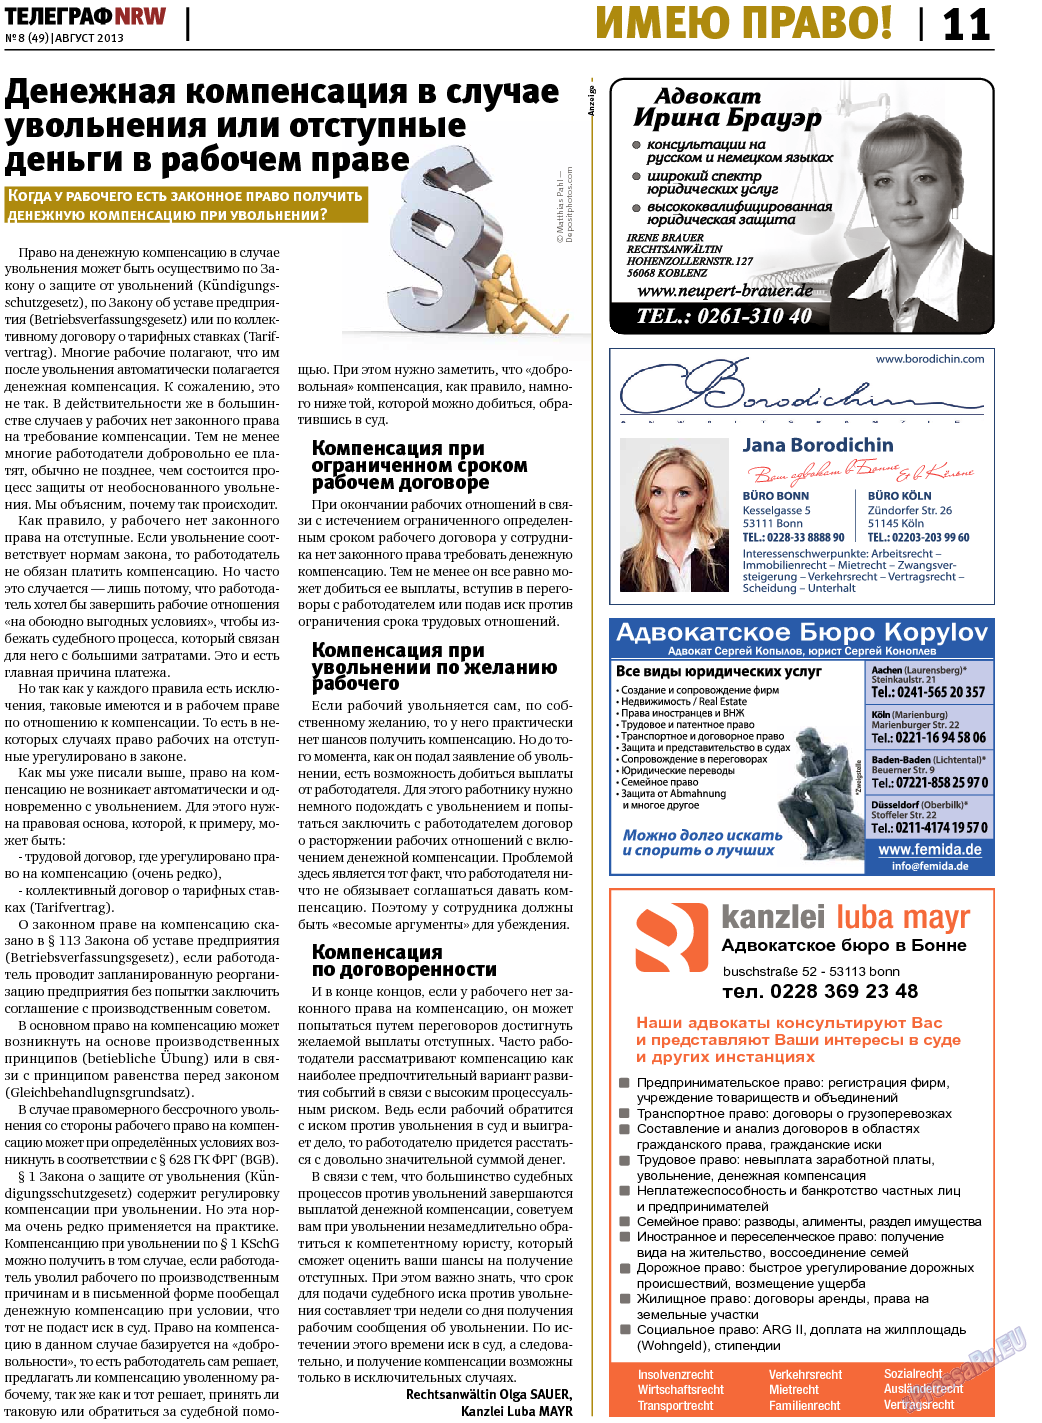 Телеграф NRW, газета. 2013 №8 стр.11